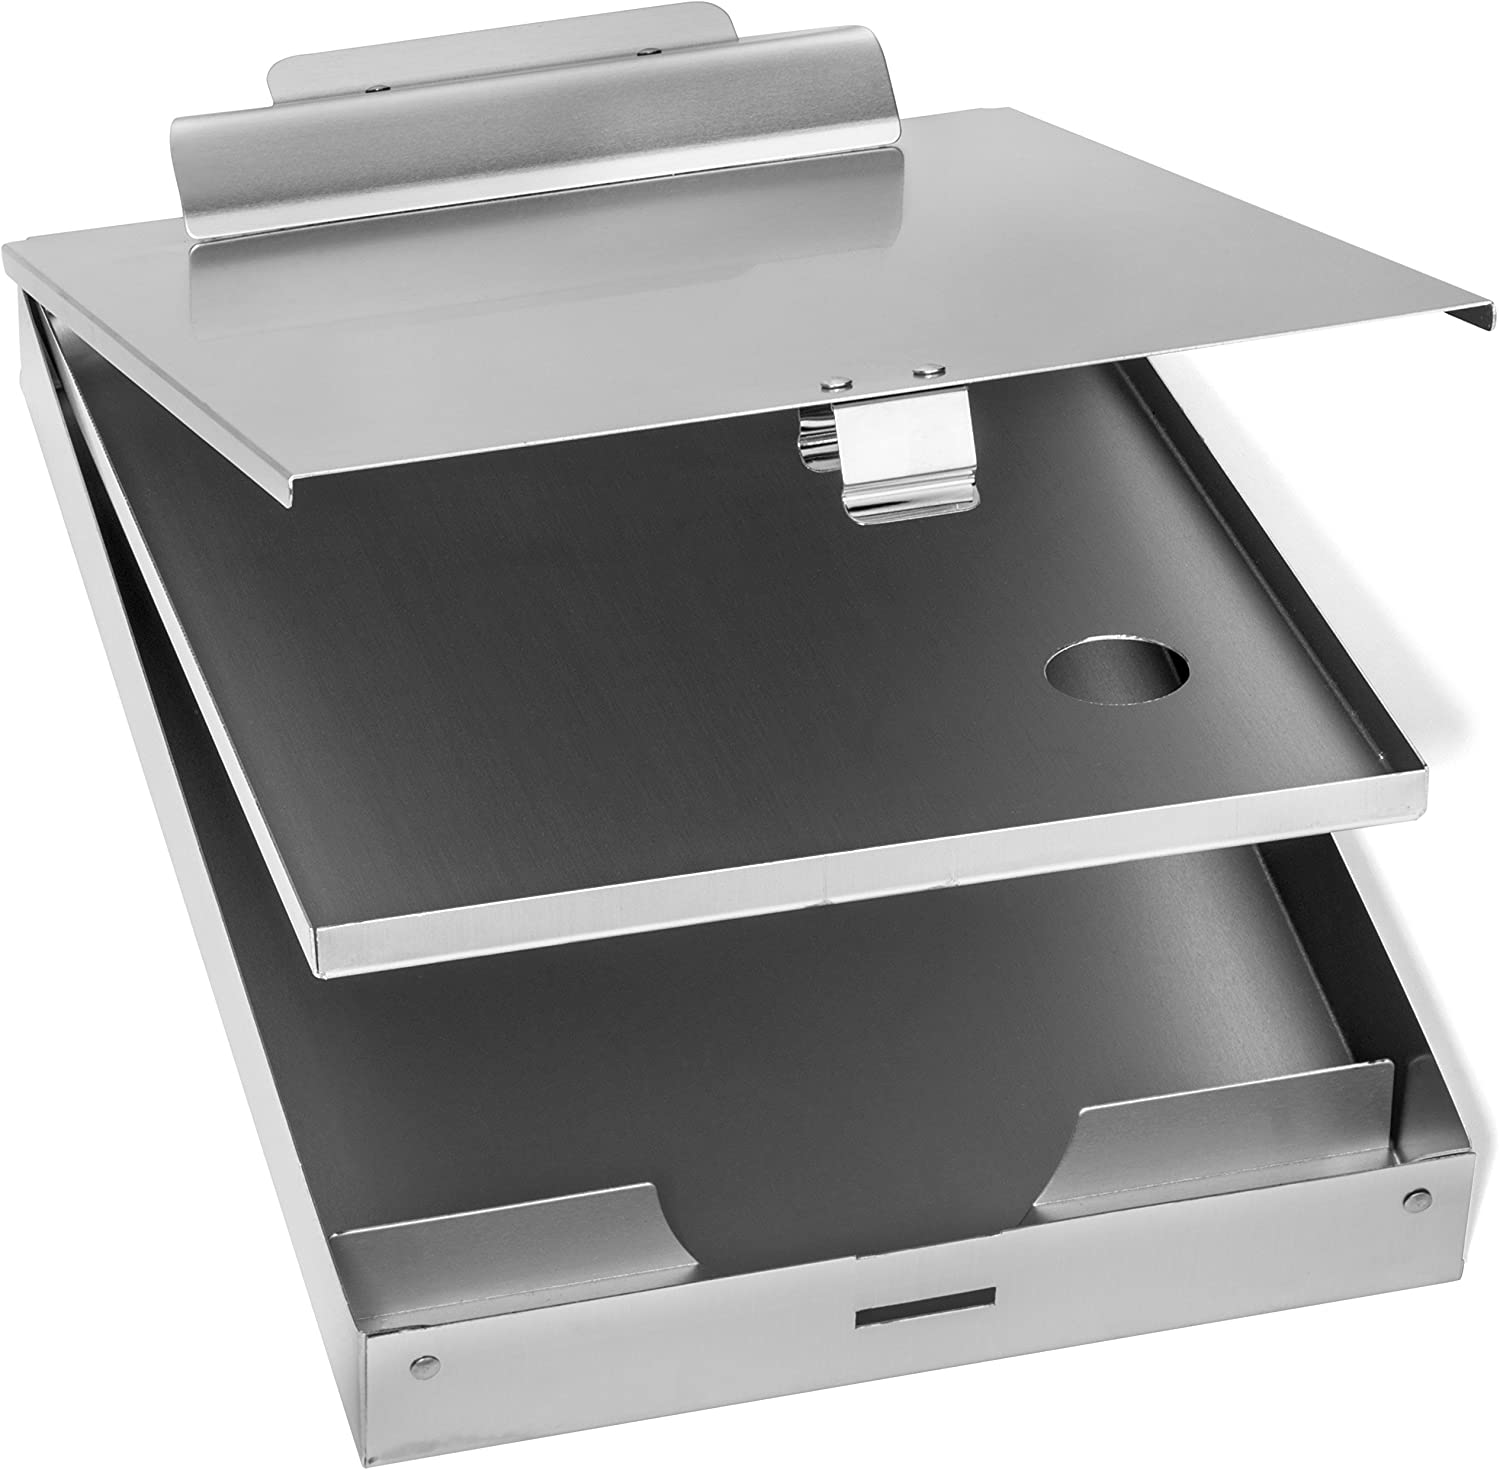 Durable & Sleek Dual Tray More it Think2Master Aluminum Dual Storage Clipboard 